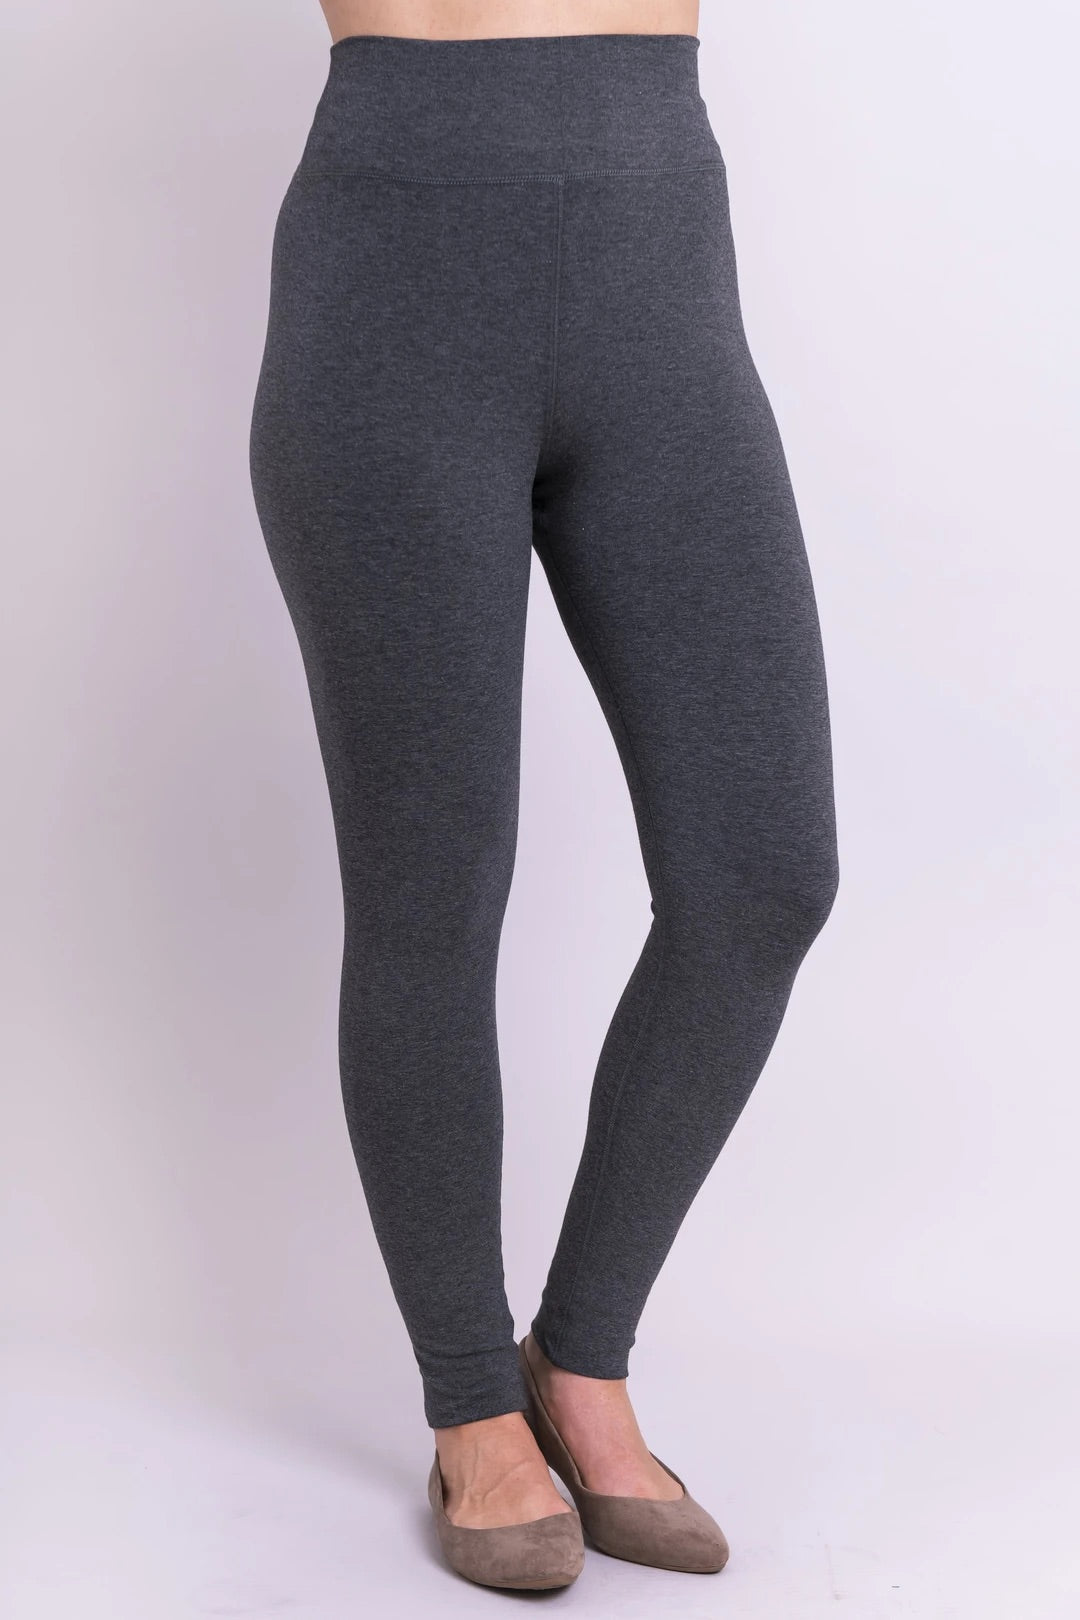 JINGGEGE Super Thin Transparent Sexy Clubwear Leggings See Through Zipper  Open Crotch Flare Pants Elastic (Color : Gray) : : Fashion